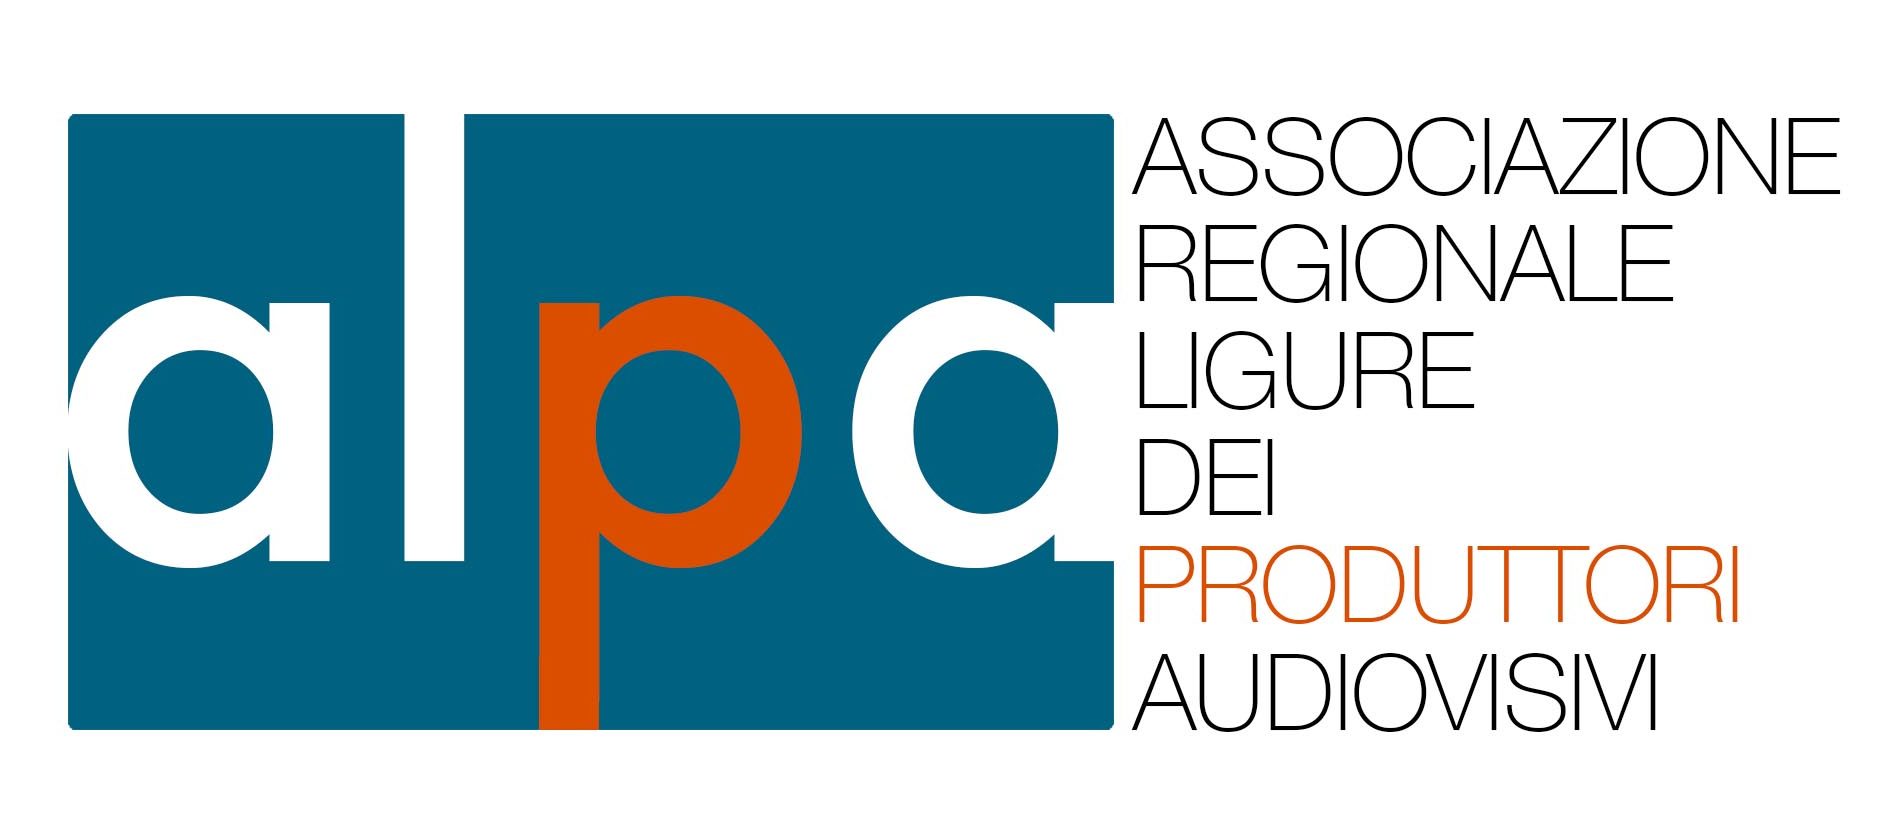 associazione regionale ligure produttori audiovisivo